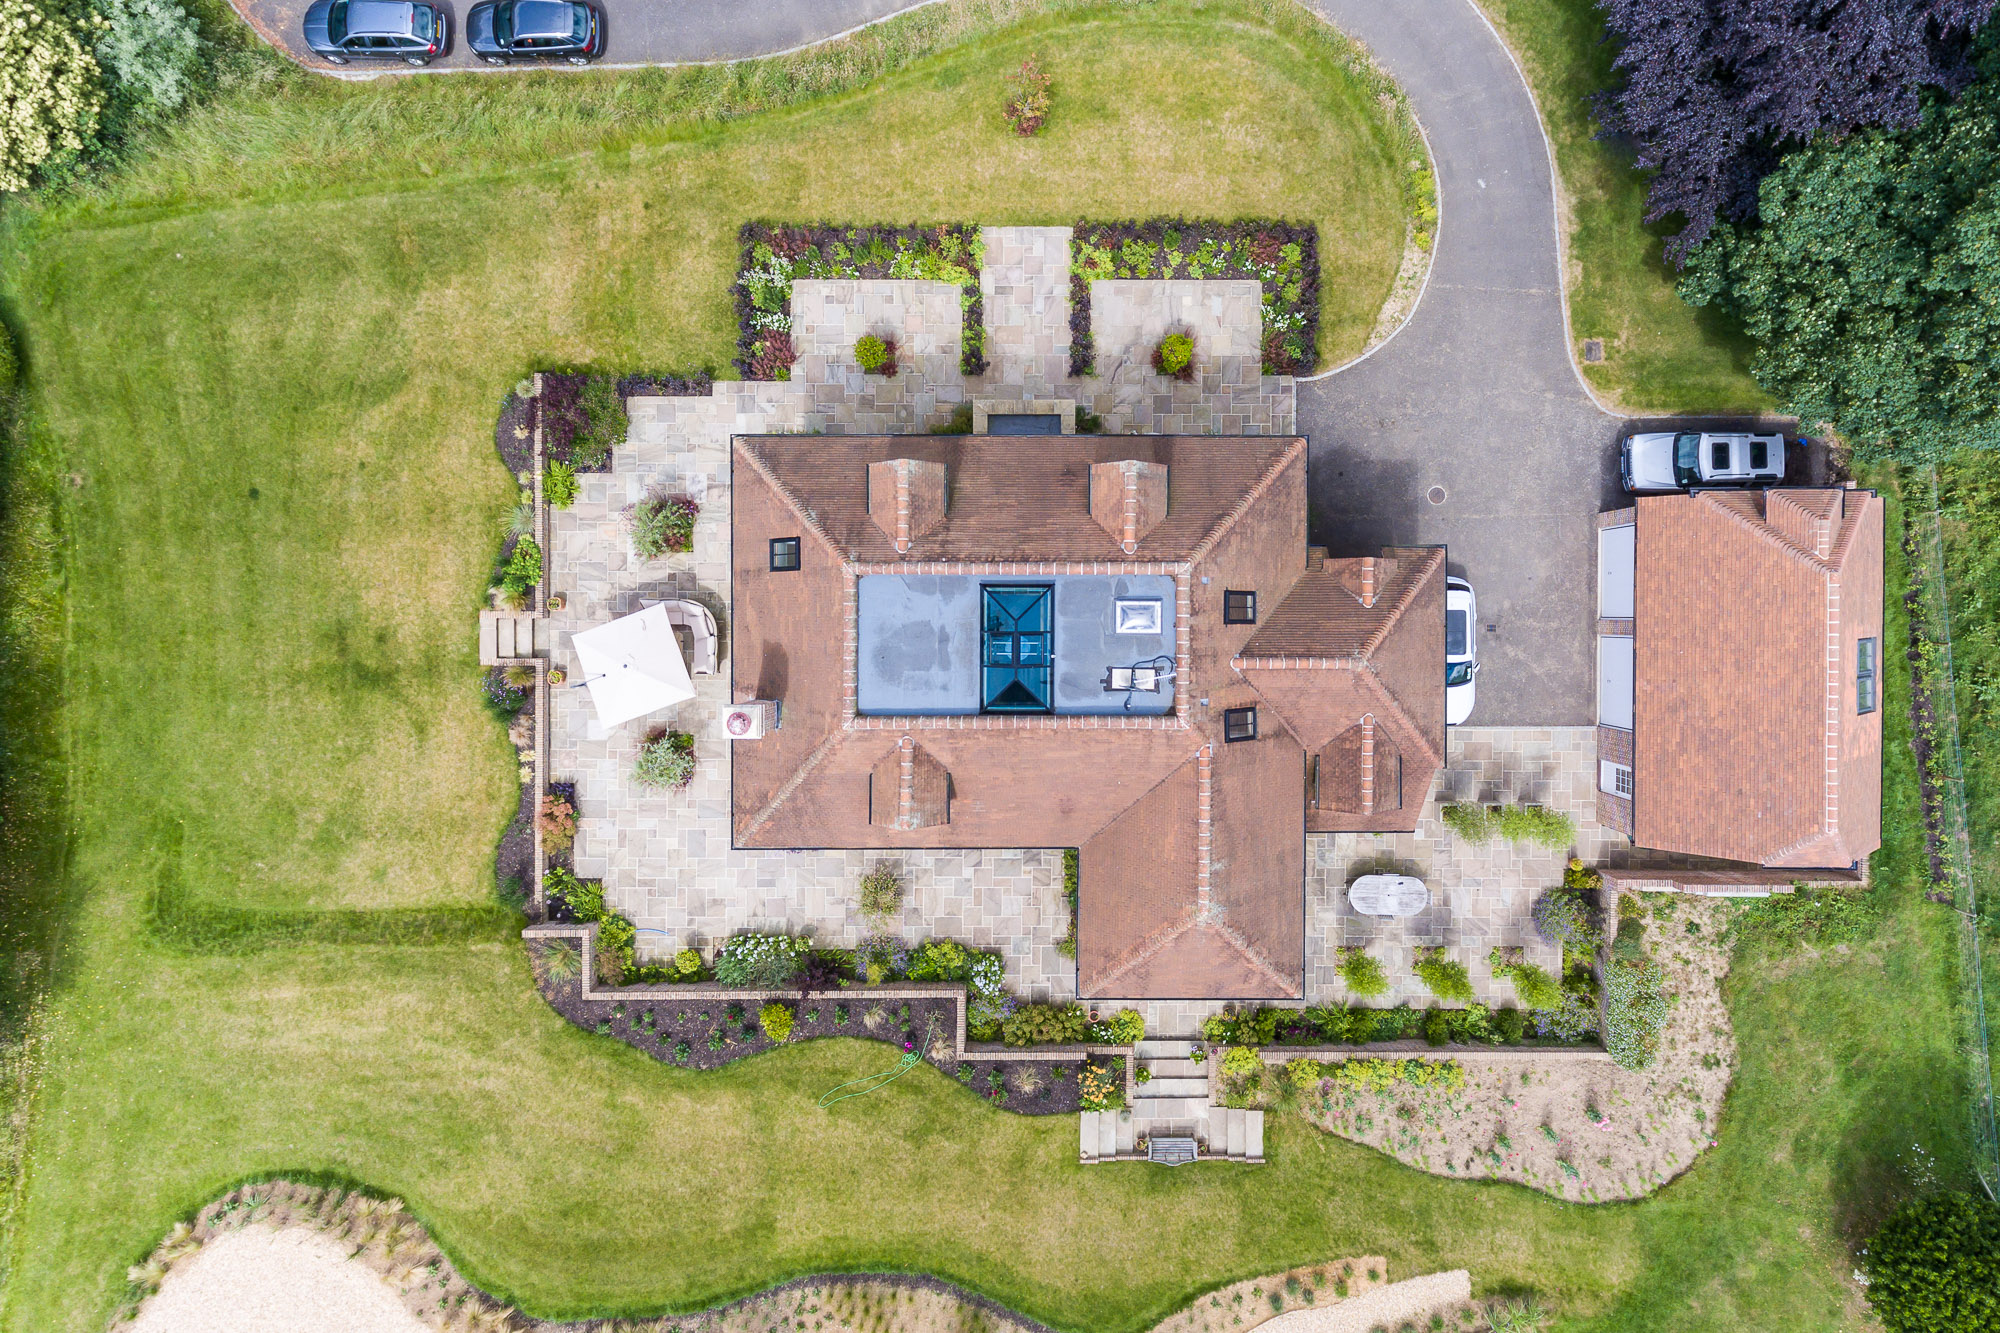 jonathan bond aerial photographer, detached residential house garden view